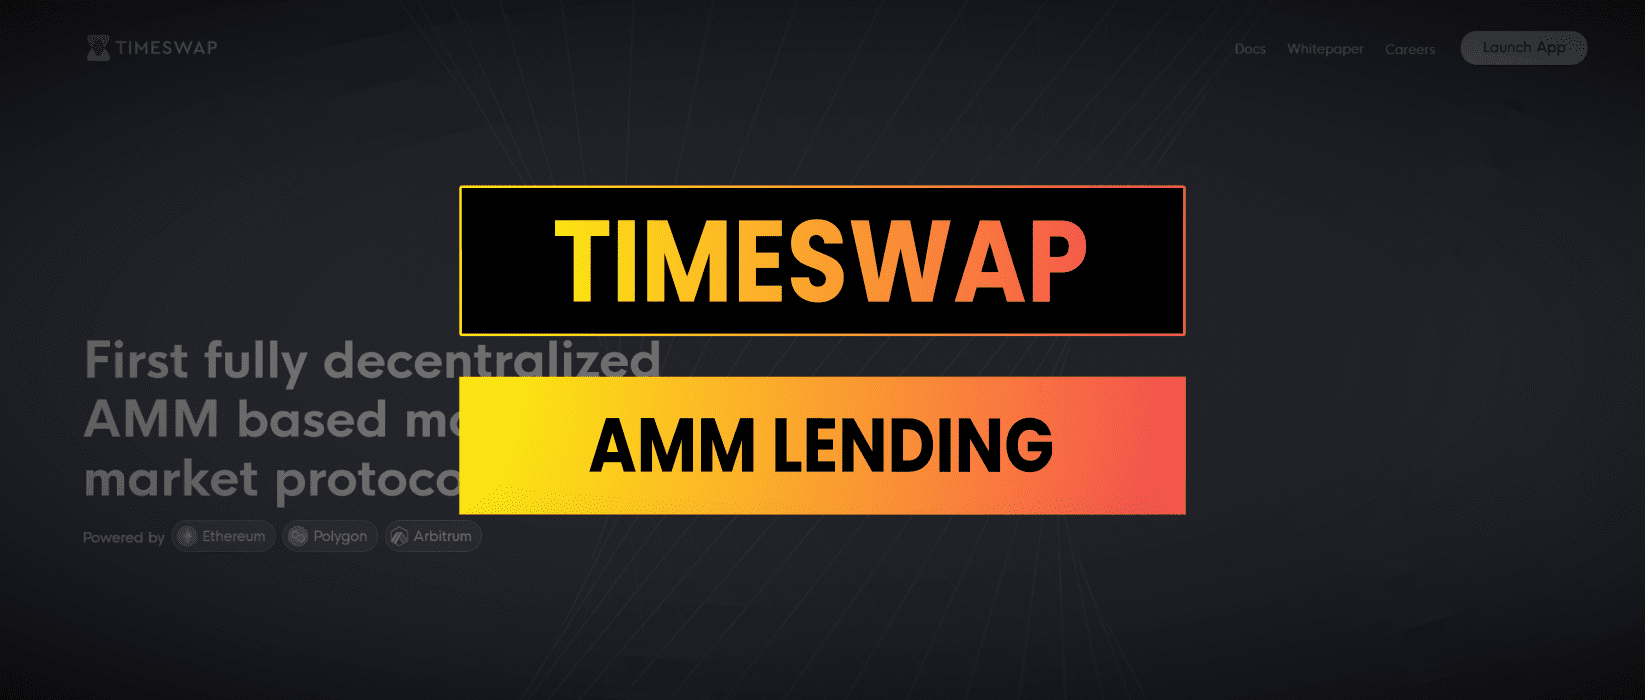 Timeswap v2 AMM Money Market | DeFi Analysis Report